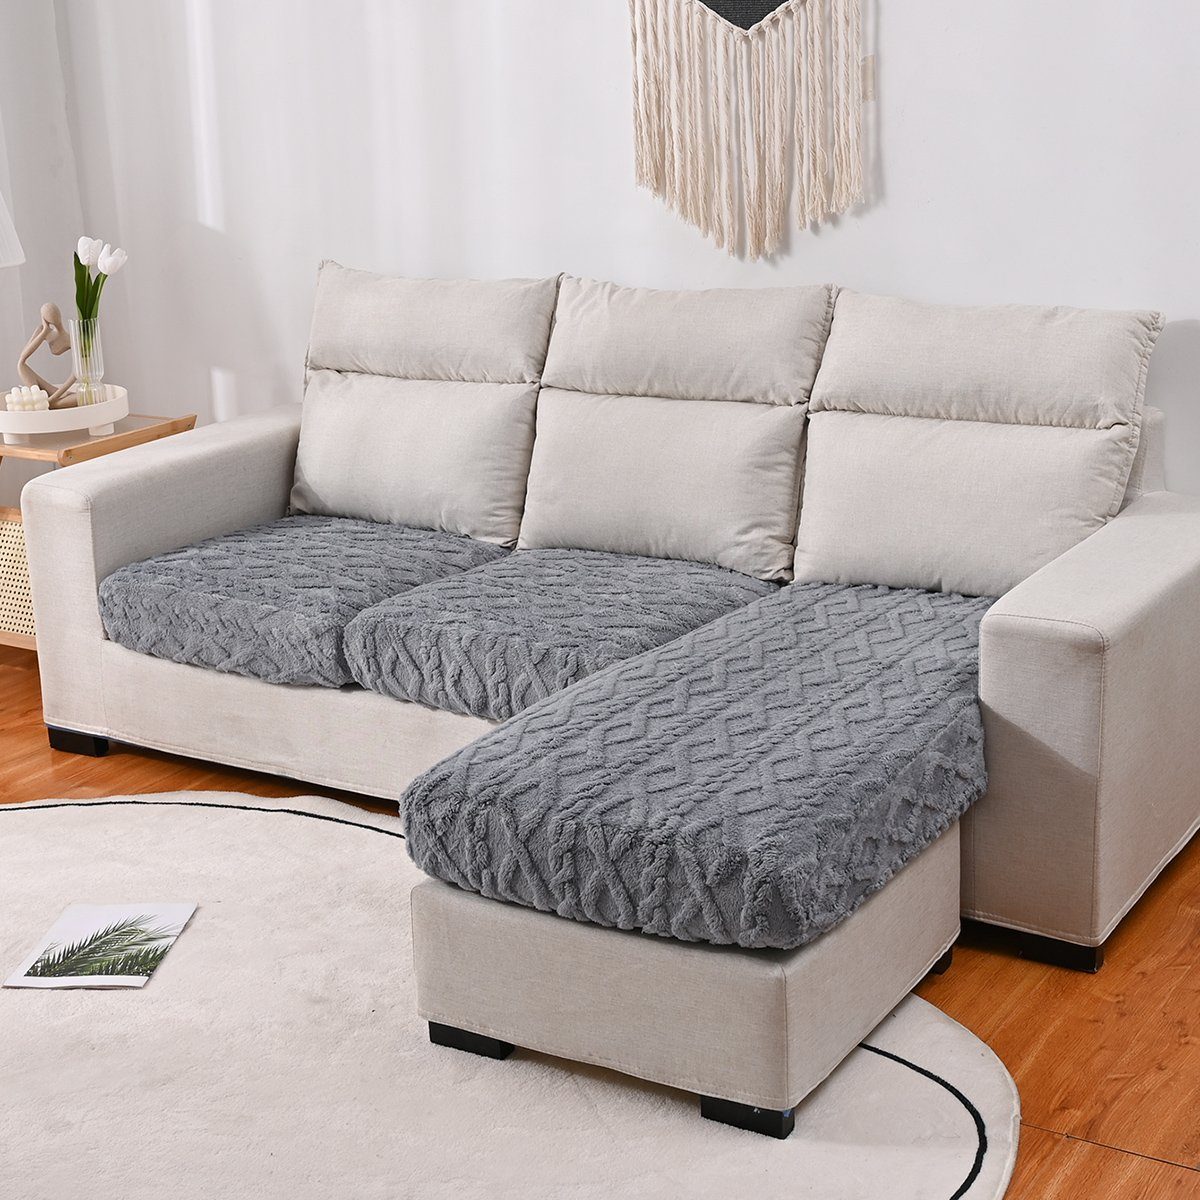 Sofahusse, HOMEIDEAS, Sofabezug L Form elastisch, Couch überzug Grau